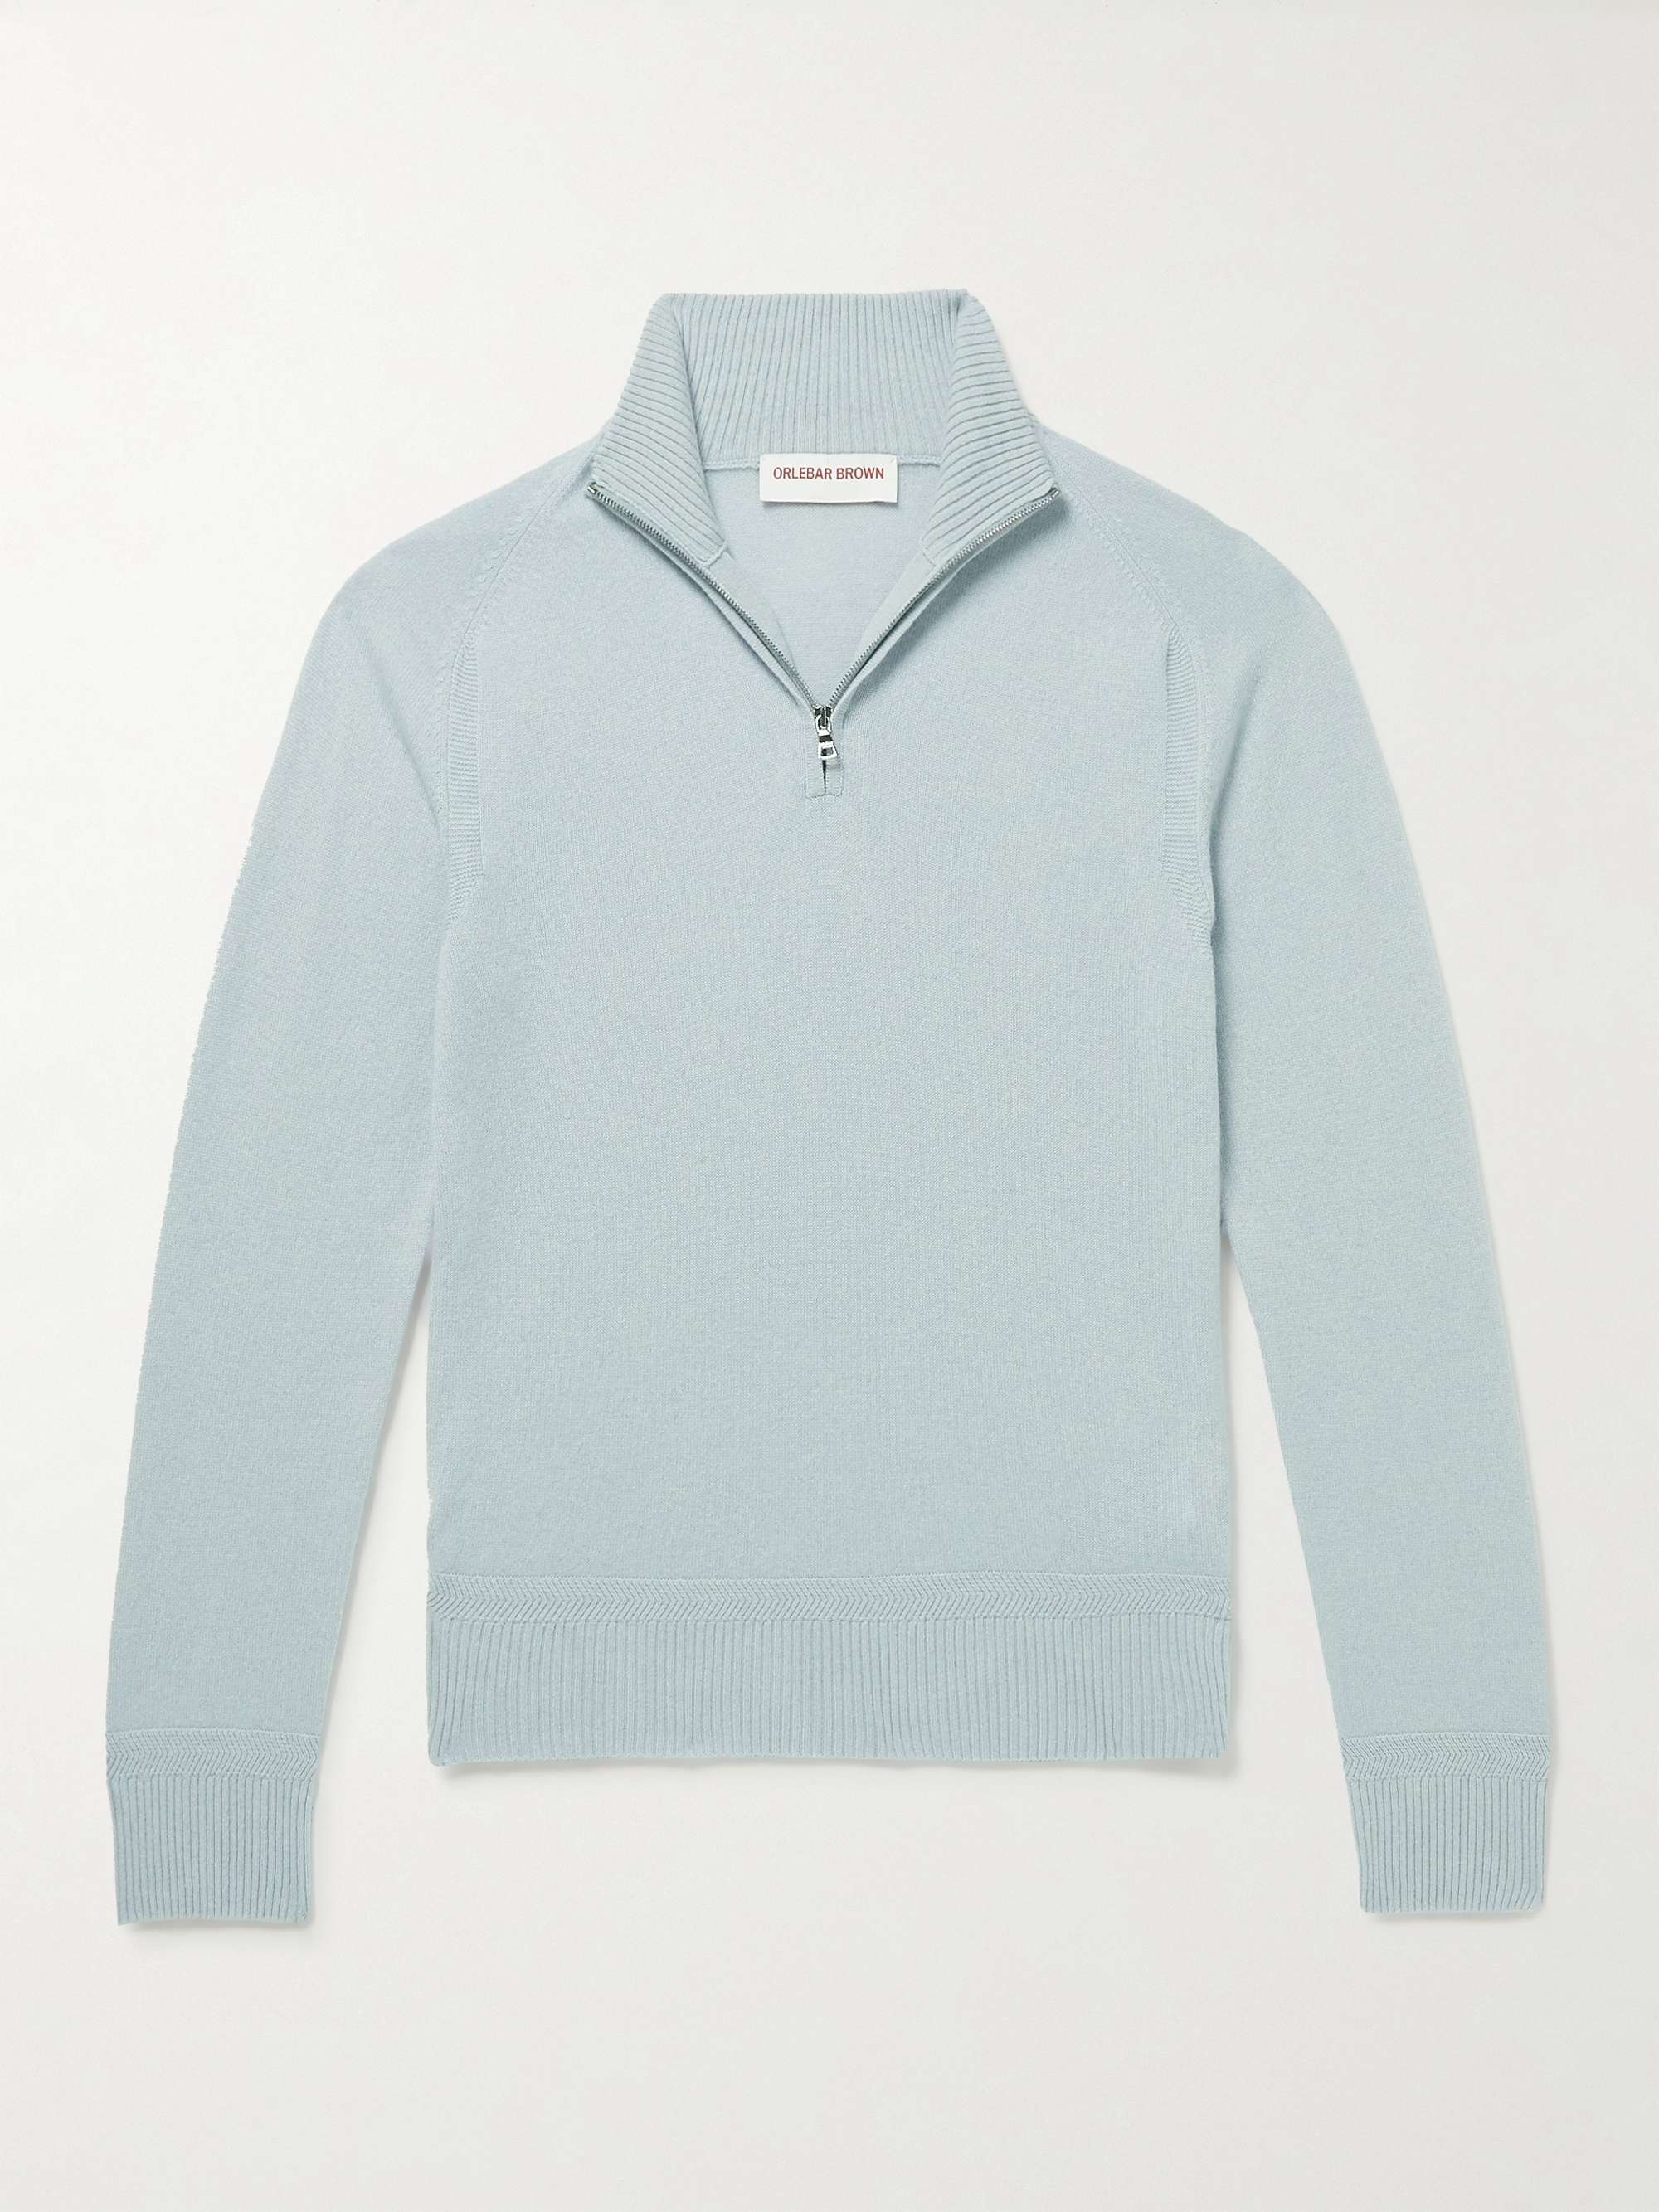 ORLEBAR BROWN Lennard Cashmere Half-Zip Sweater